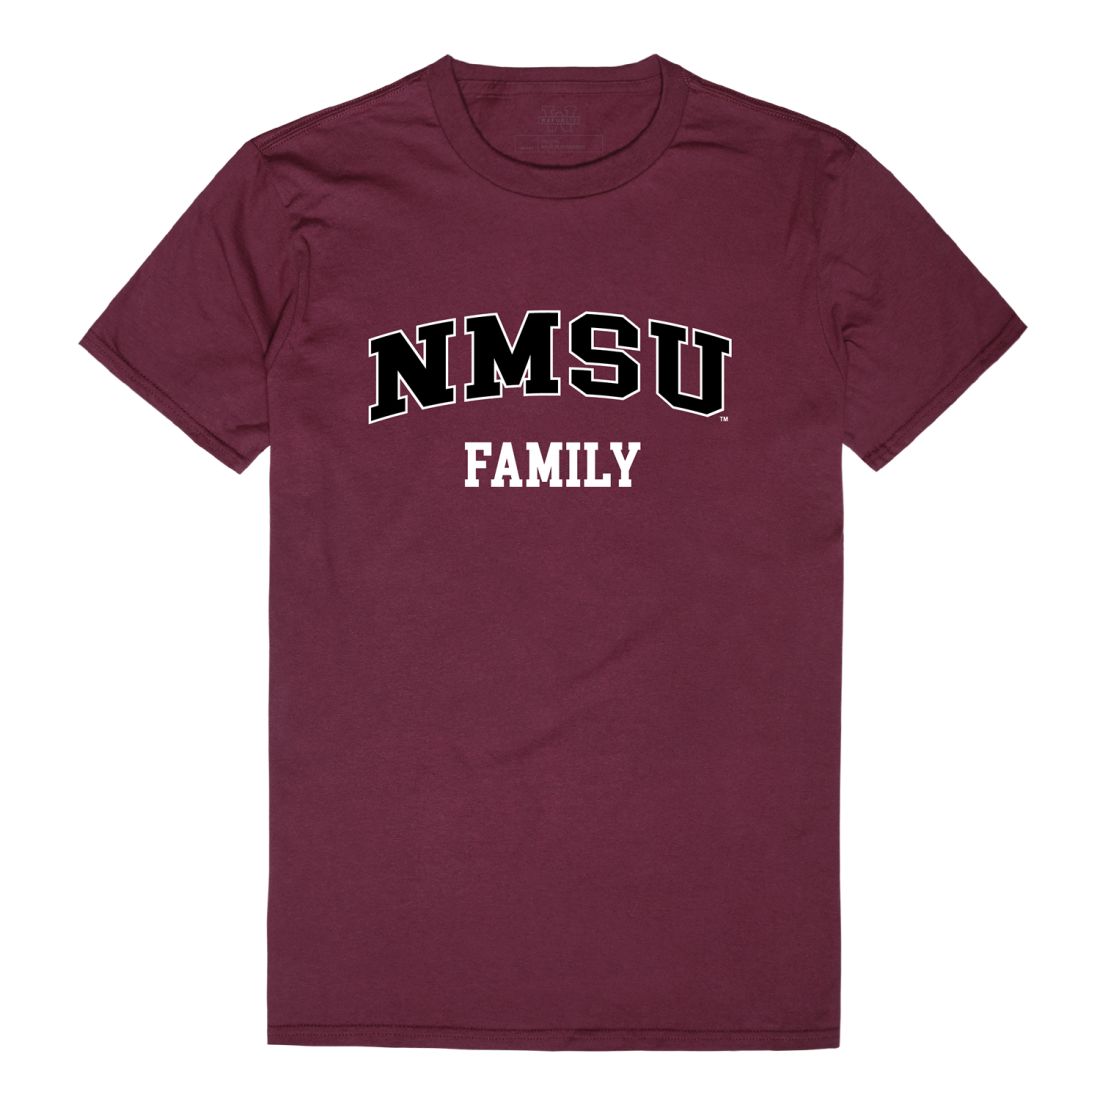 NMSU New Mexico State University Aggies Family T-Shirt